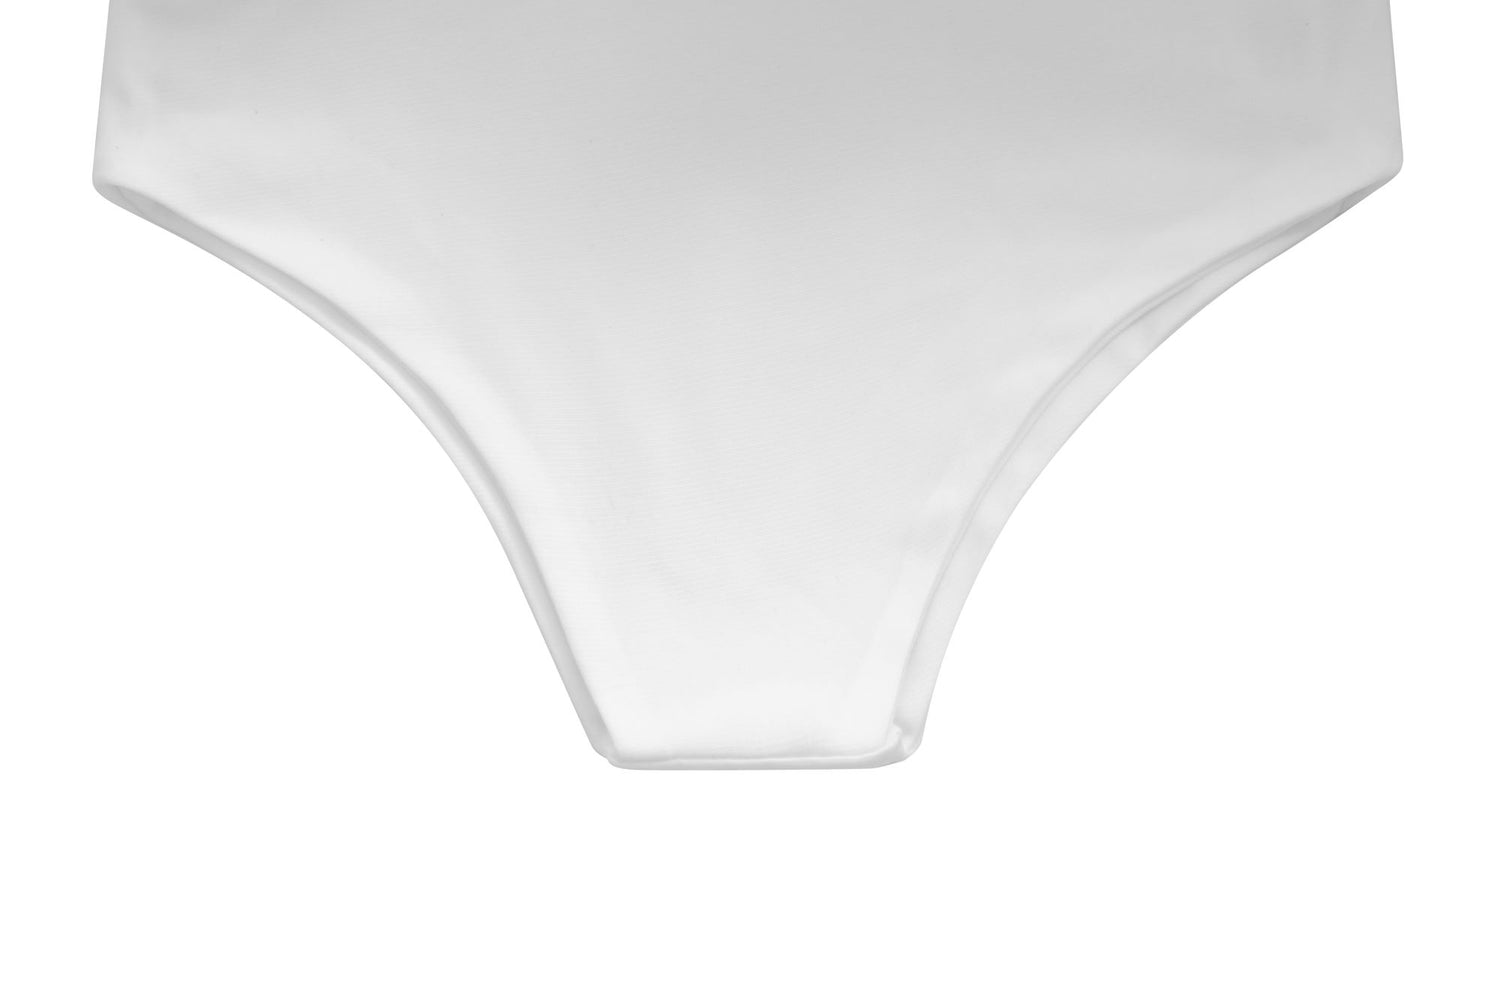 a white bikini bottom with a high waist